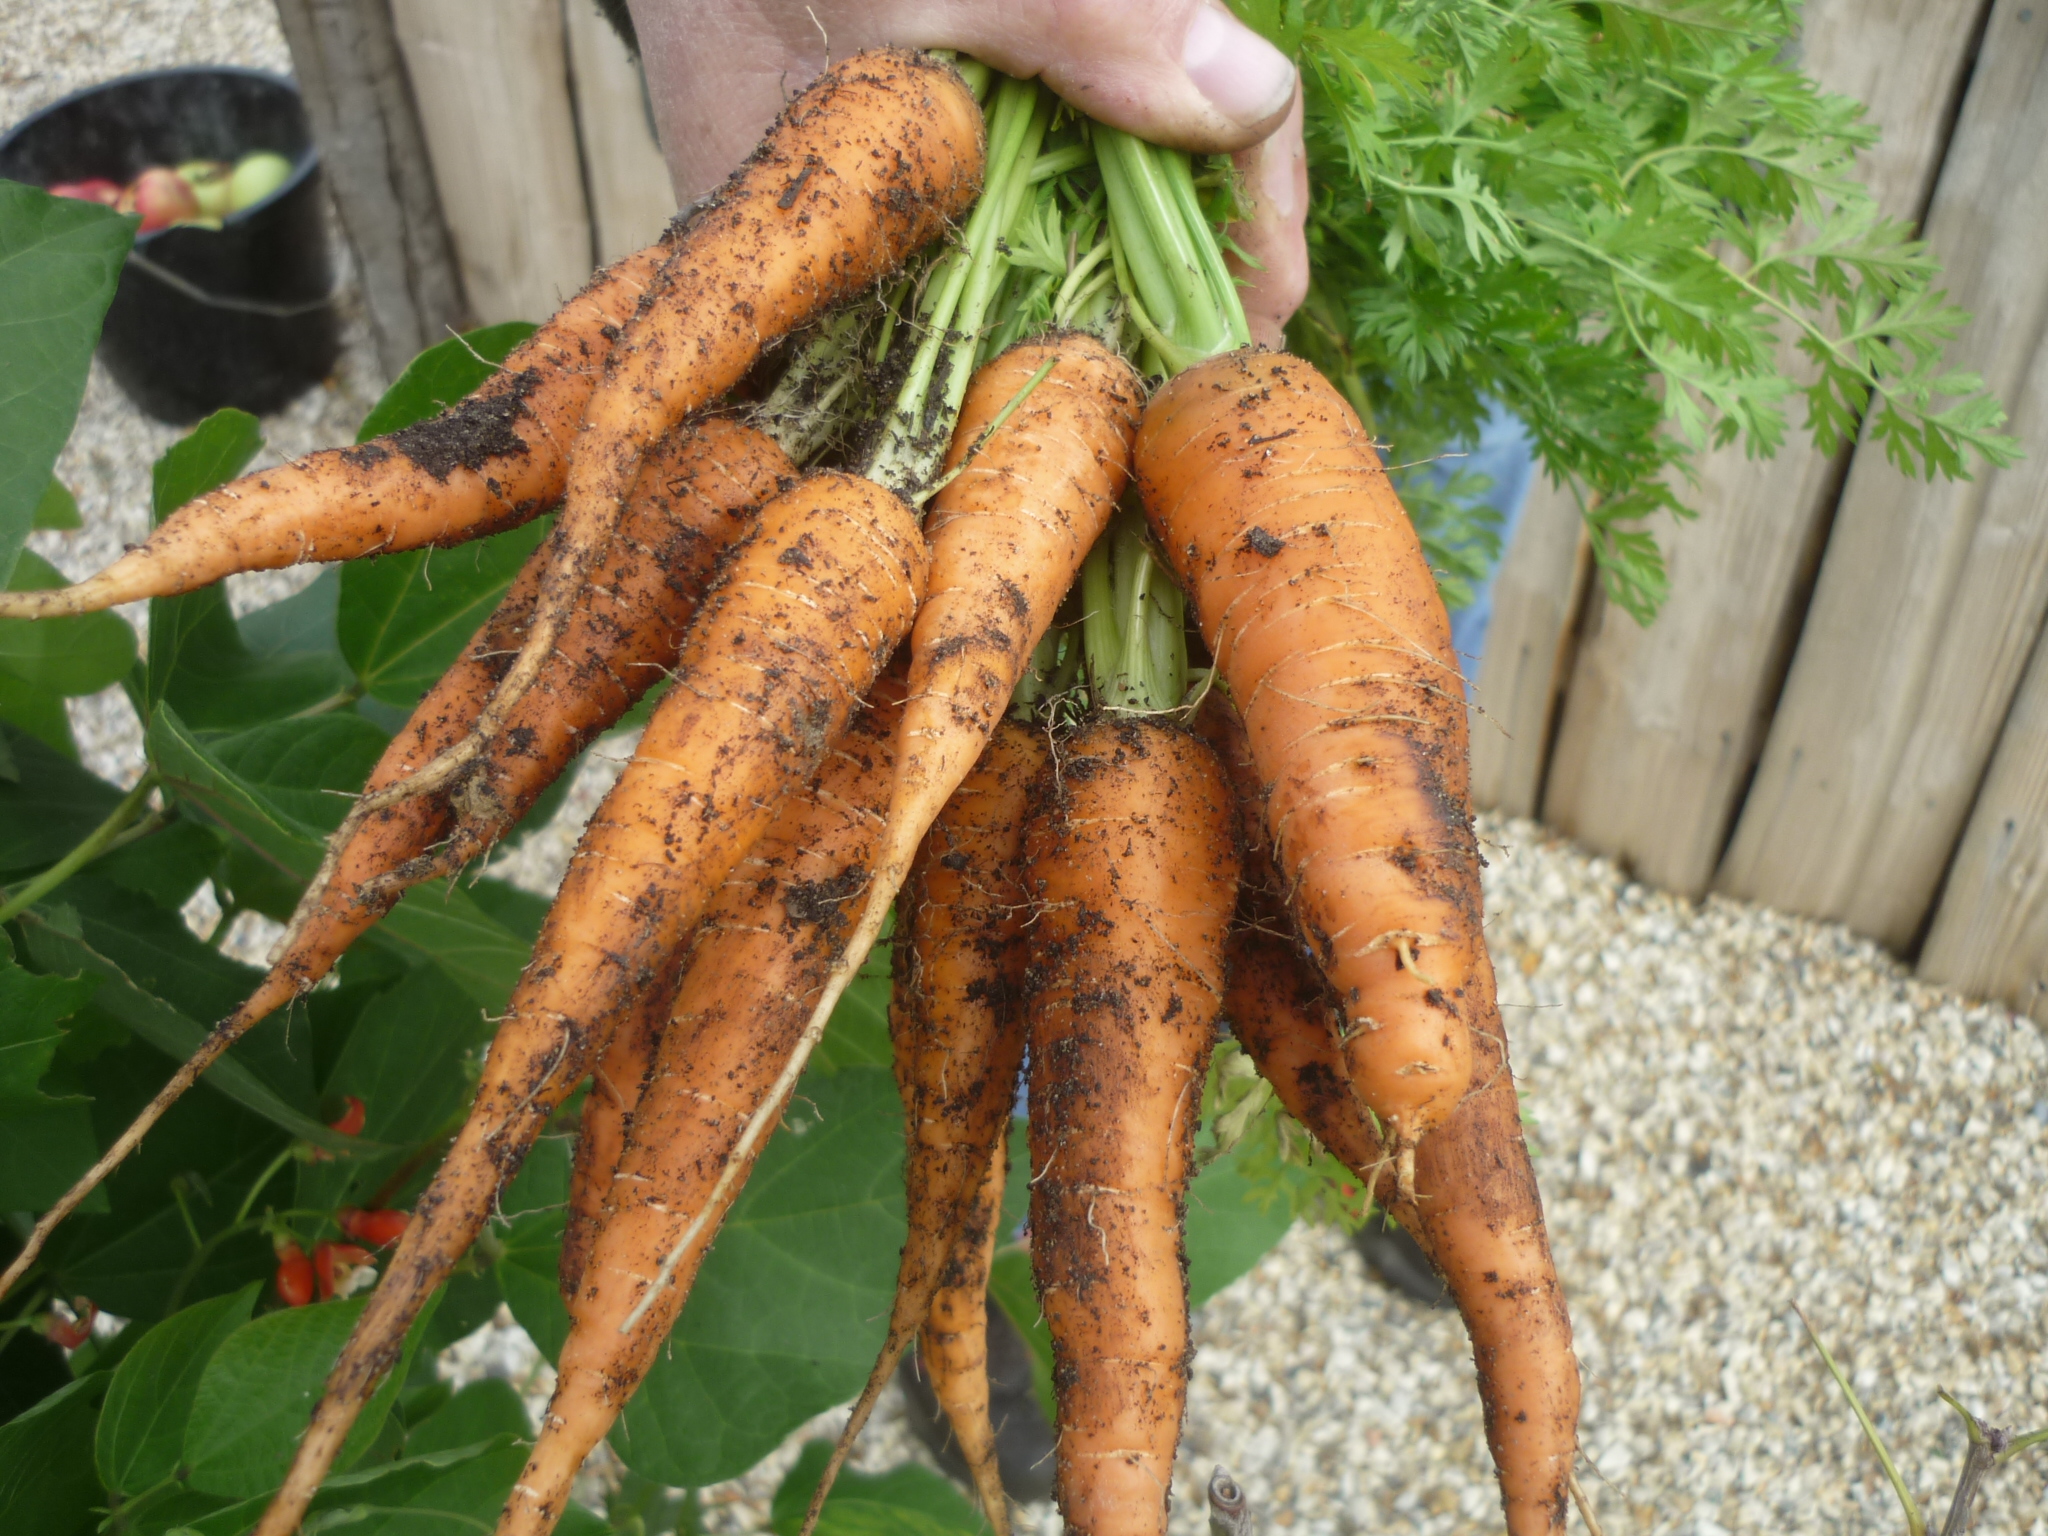 Bunch of organic carrots